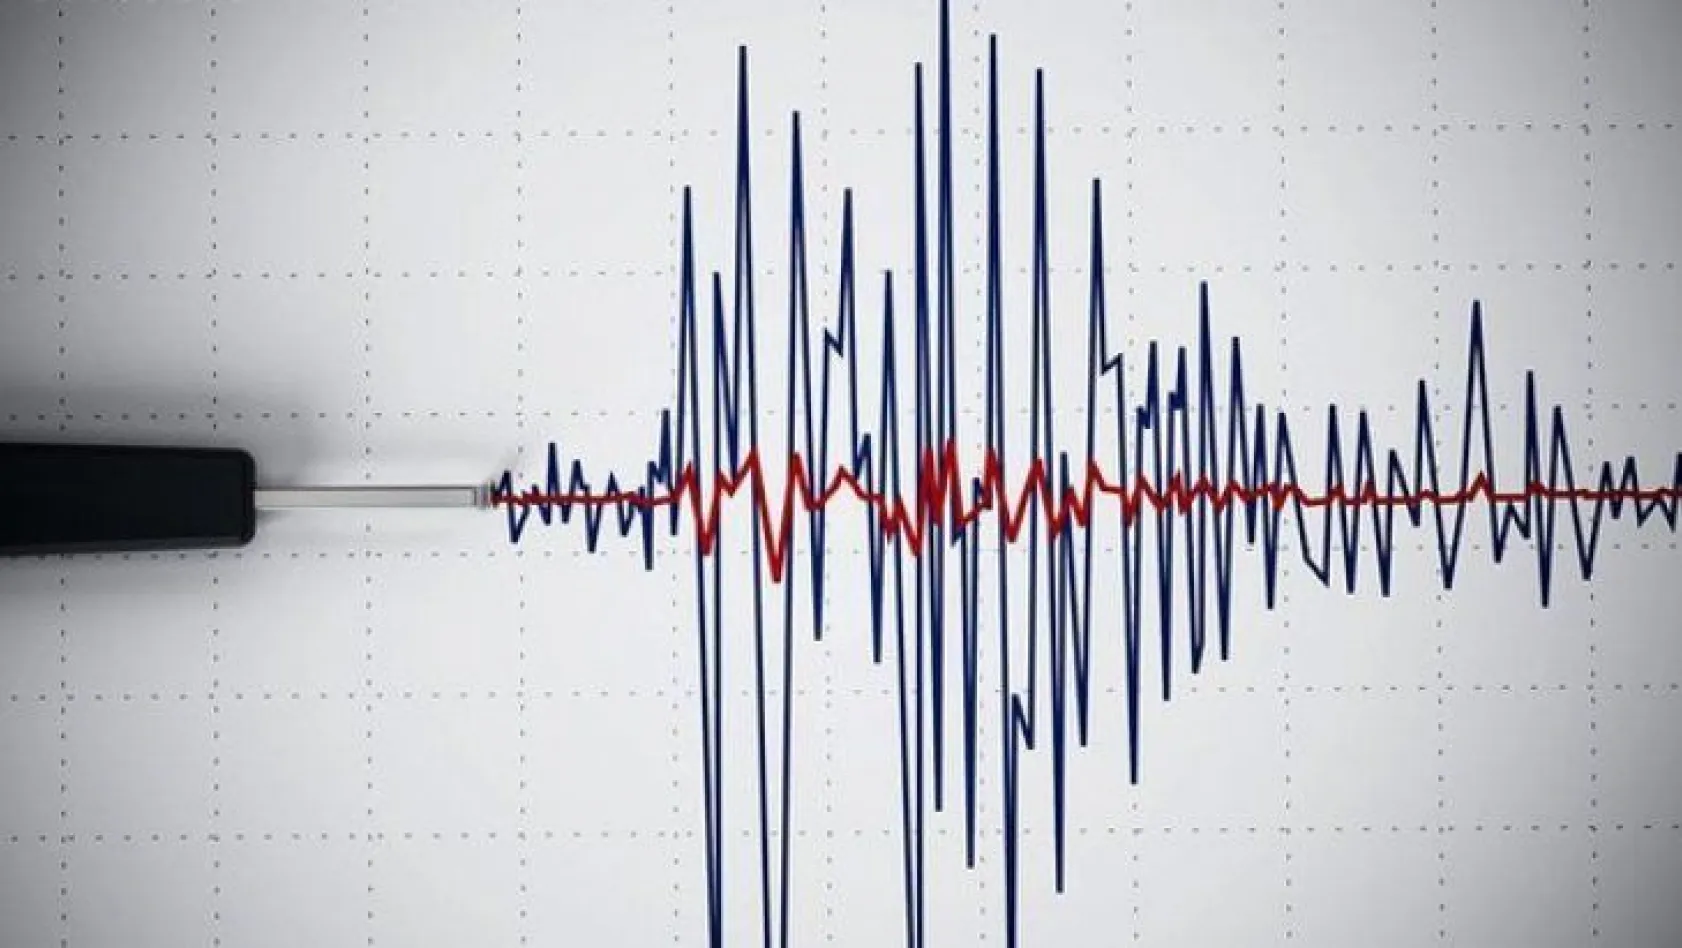 Tunceli'de 4.2'lik deprem